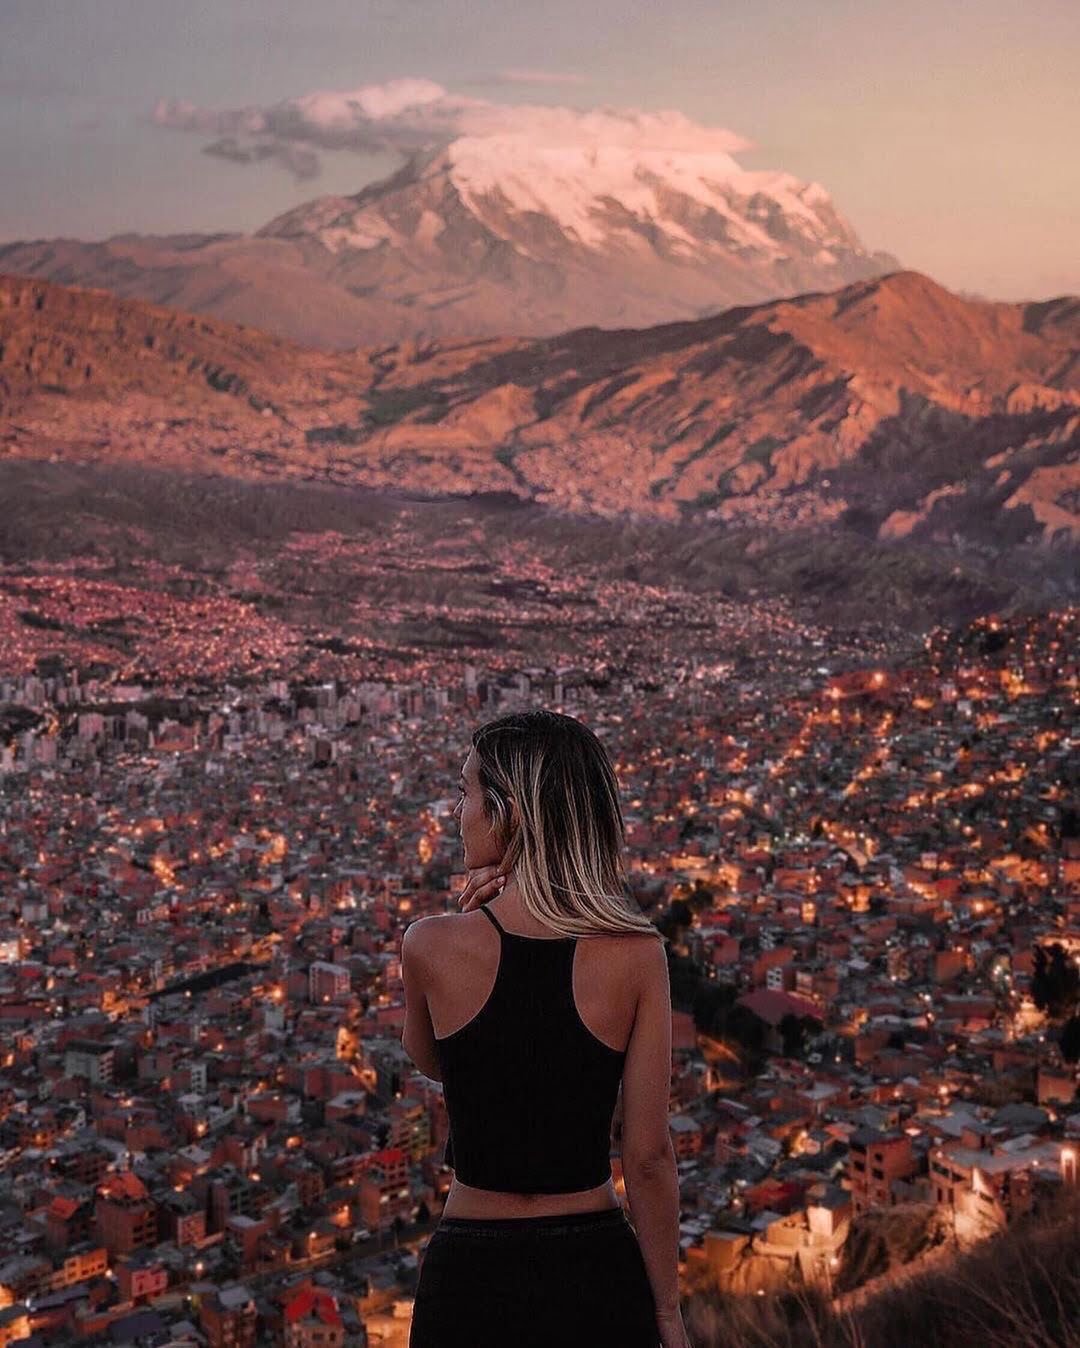 La Paz Bolivia Tour – Valle de las Animas, Moon Valley & City tour